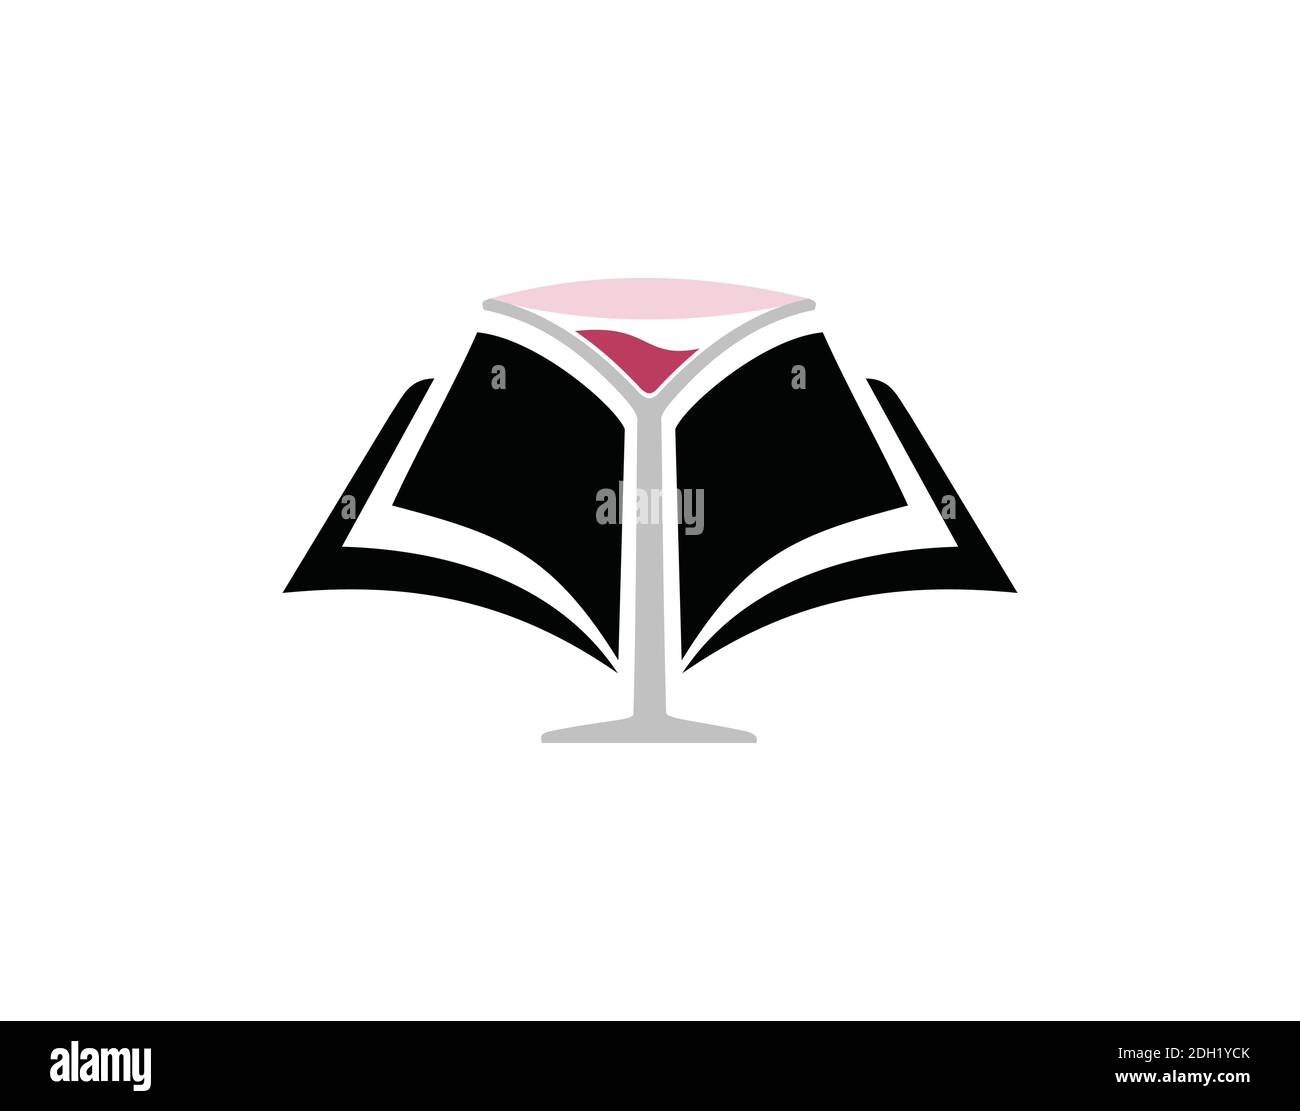 cocktail and book logo icon symbol designs Stock Vector